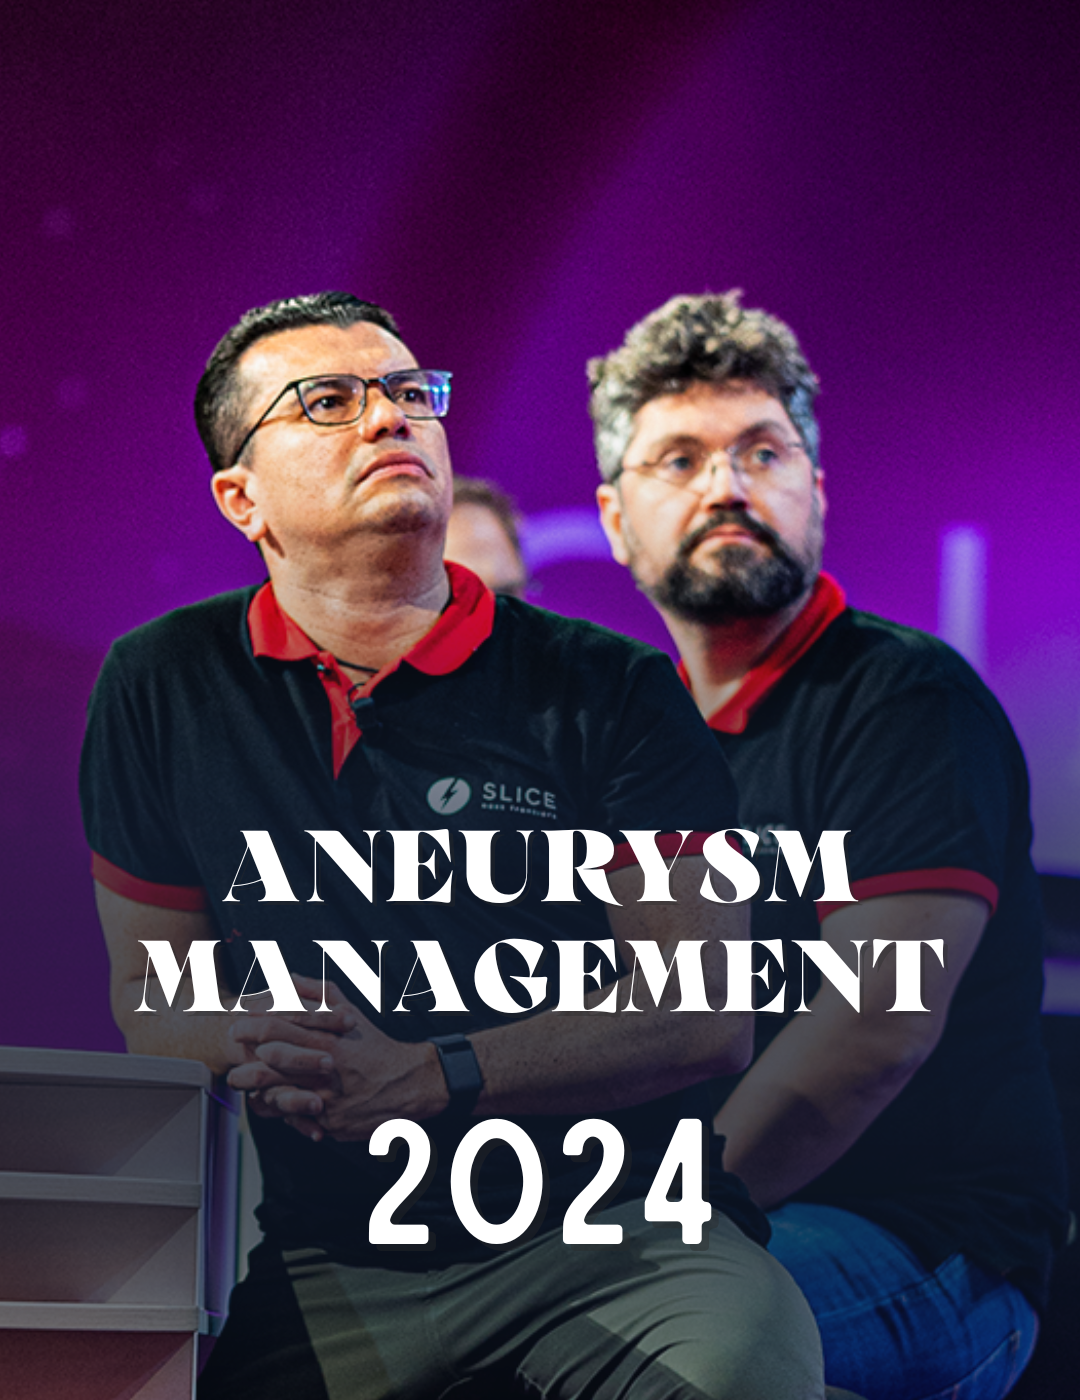 Aneurysm management 2024